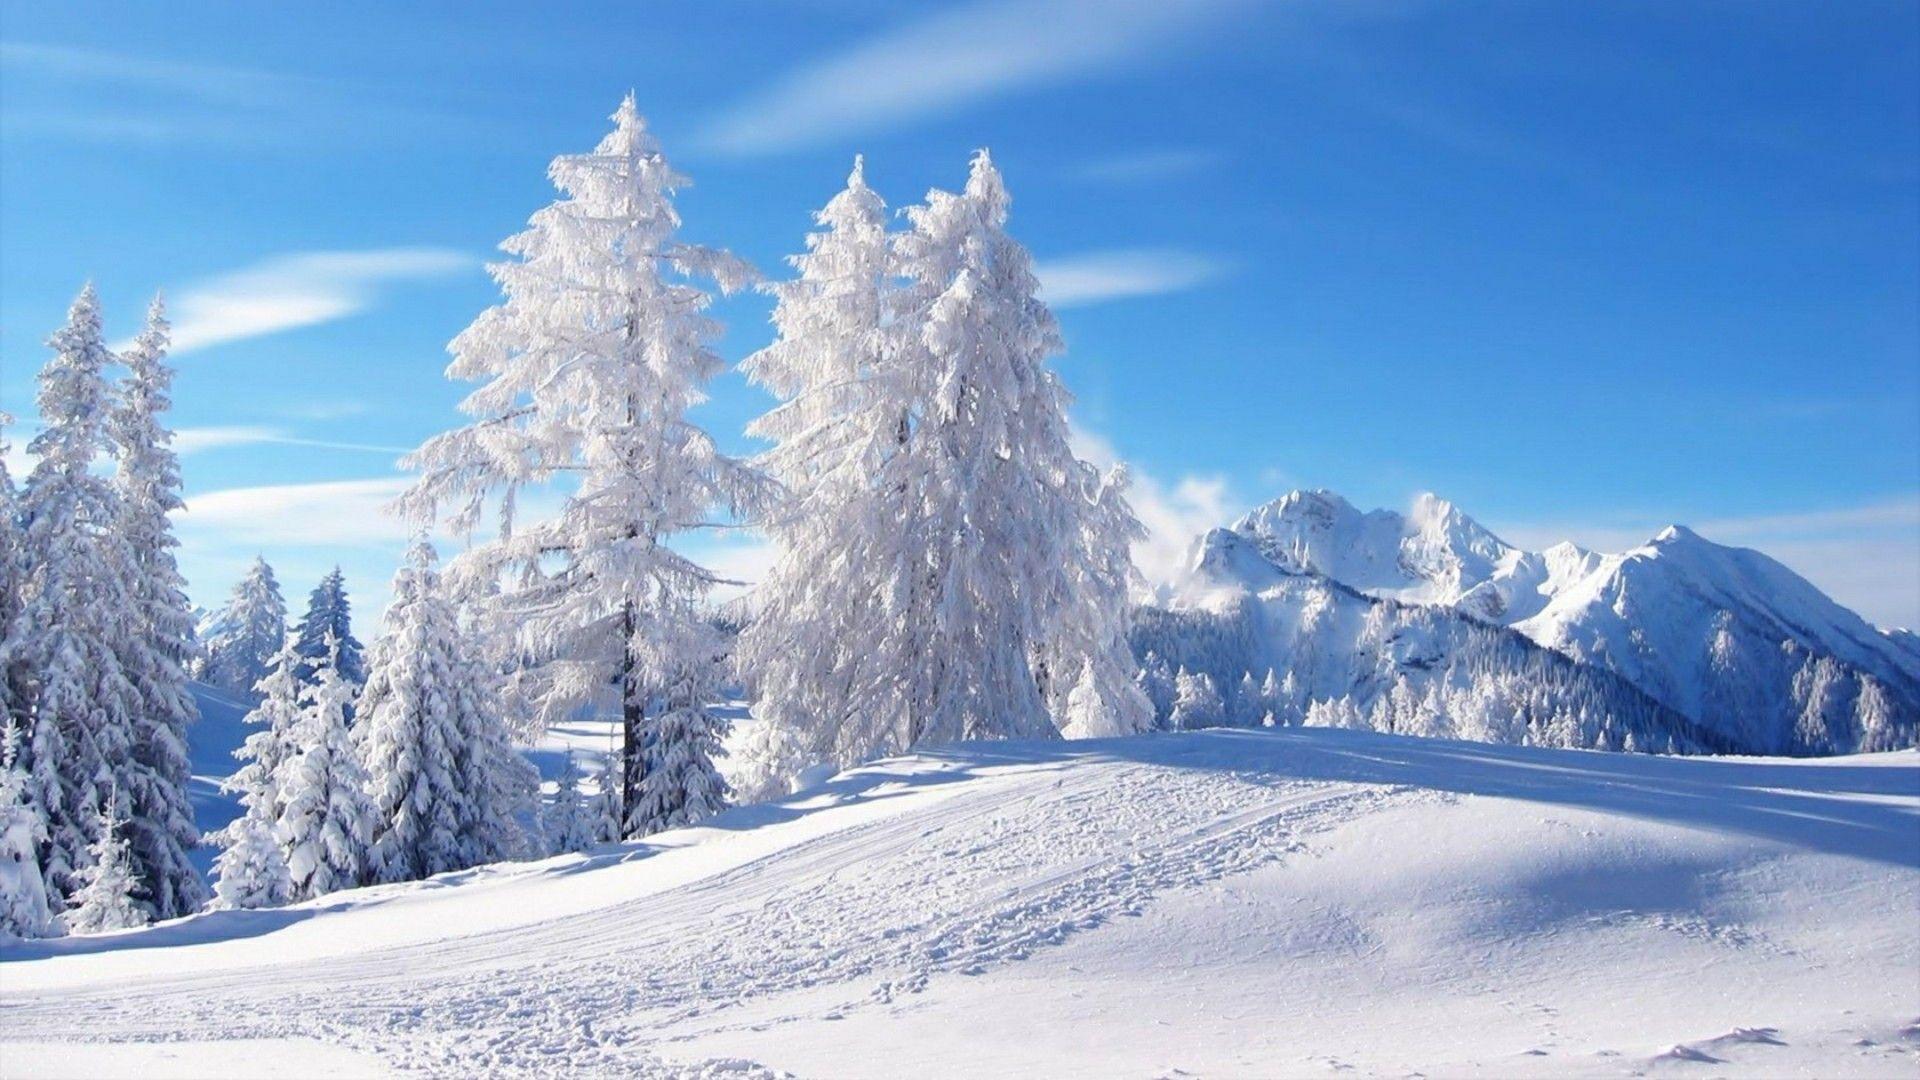 Winter Snow Landscape Wallpapers - Top Free Winter Snow Landscape